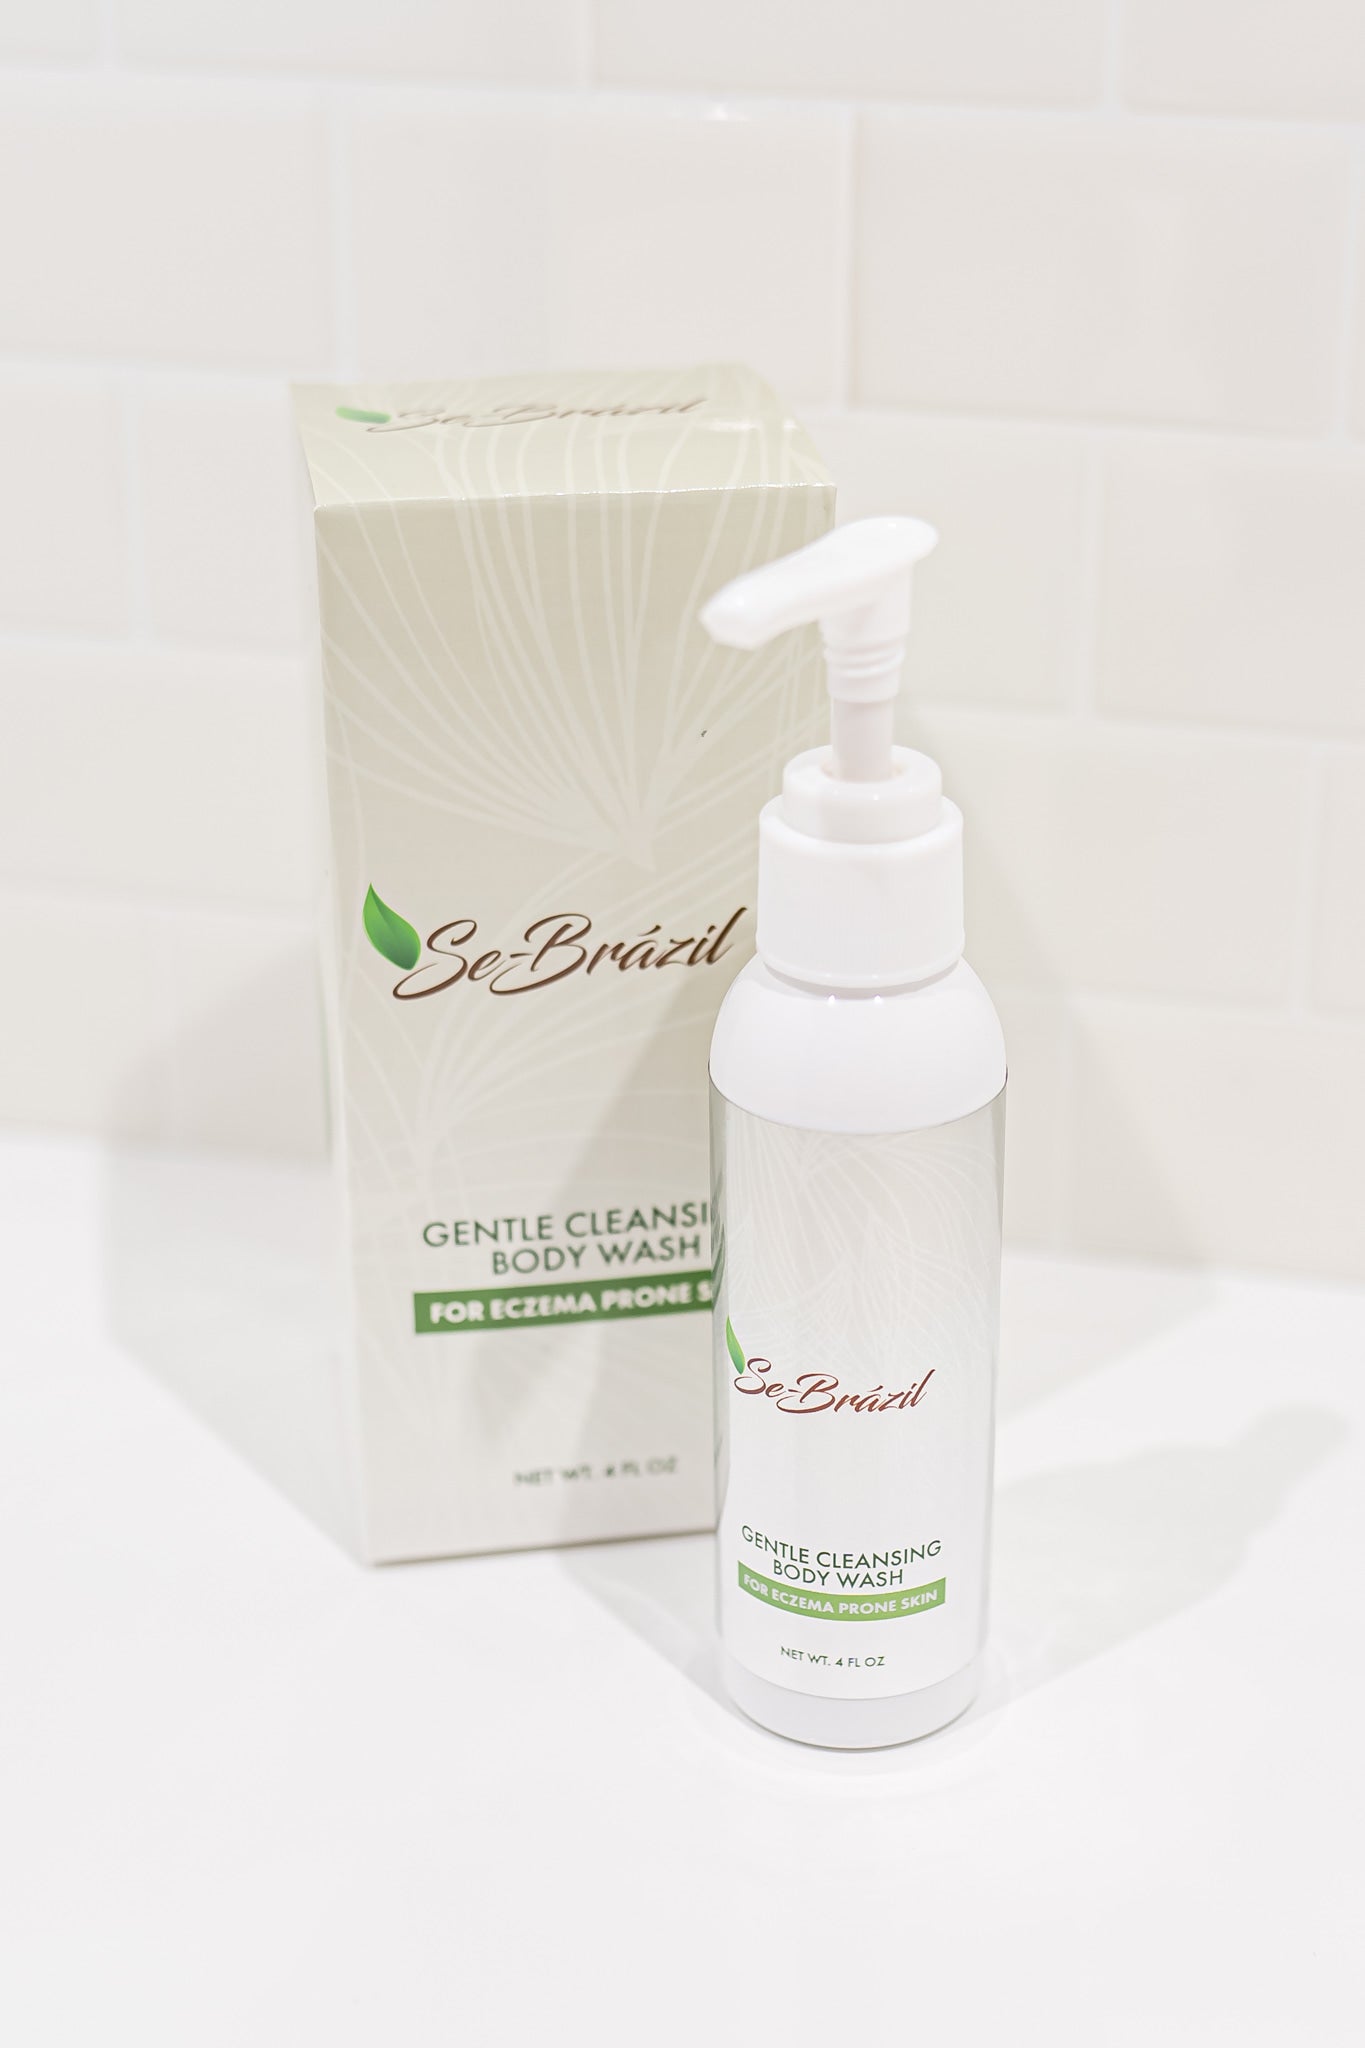 Se-Brazil Gentle Cleansing Body Wash for Eczema Prone Skin